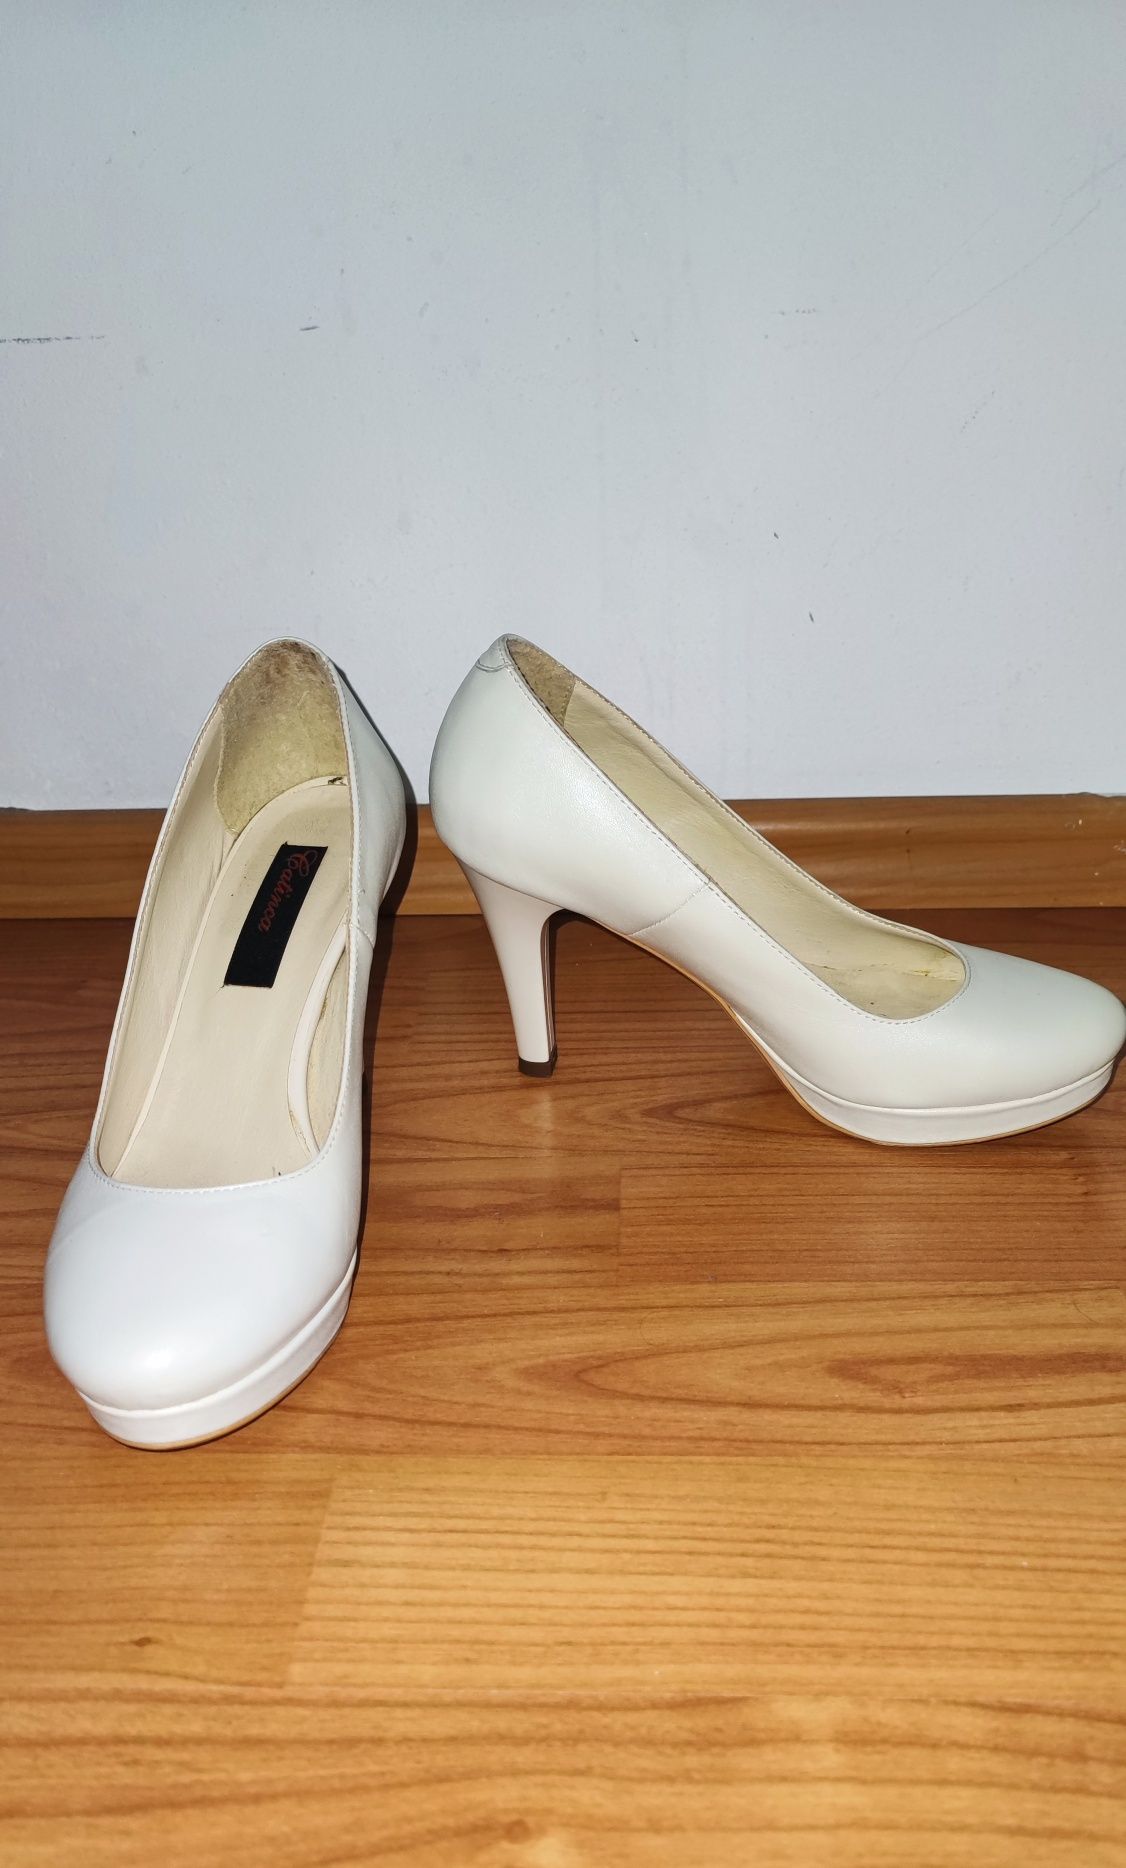 Pantofi cu toc (culoare alb-sidefat) măsura 36-37